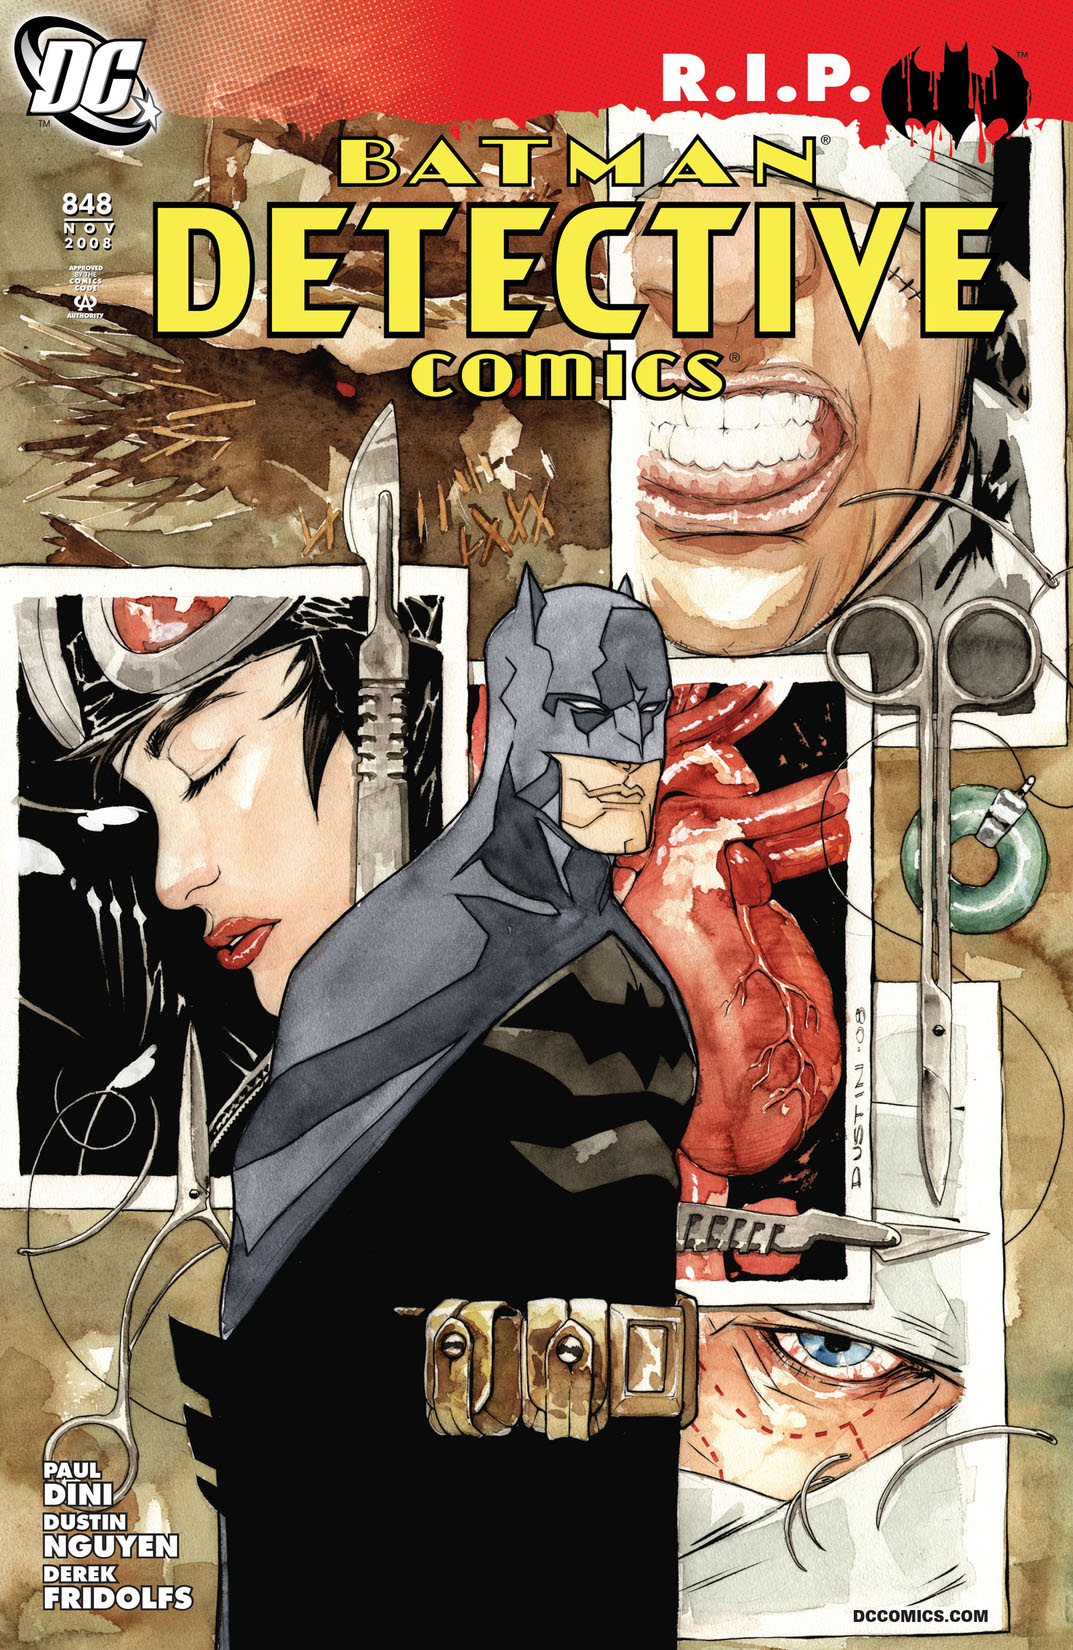 Detective Comics (1937-) #848 preview images